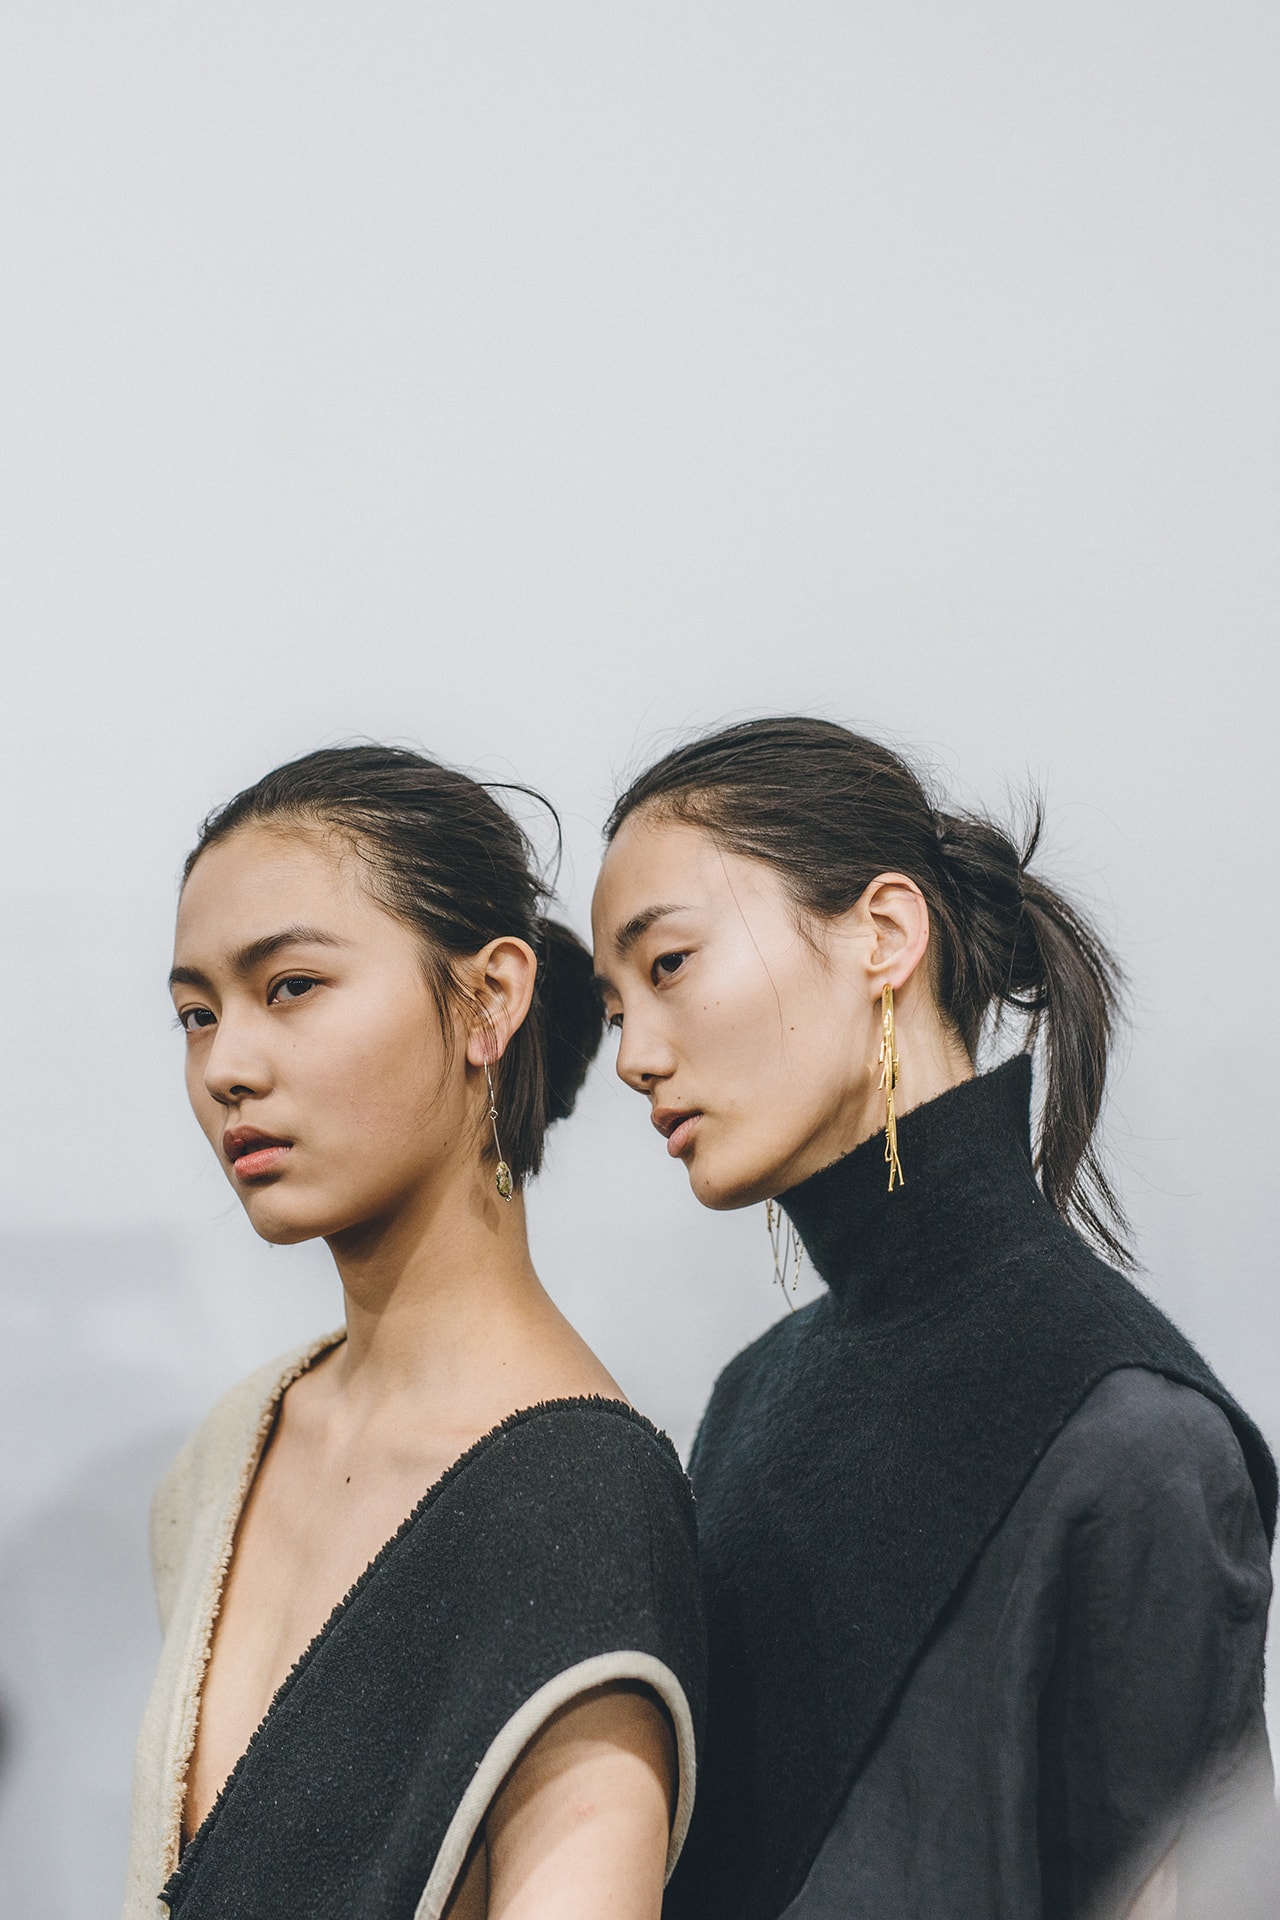 Jil Sander Fall Winter 2019 Runway Show Backstage Milan Fashion Week asian models